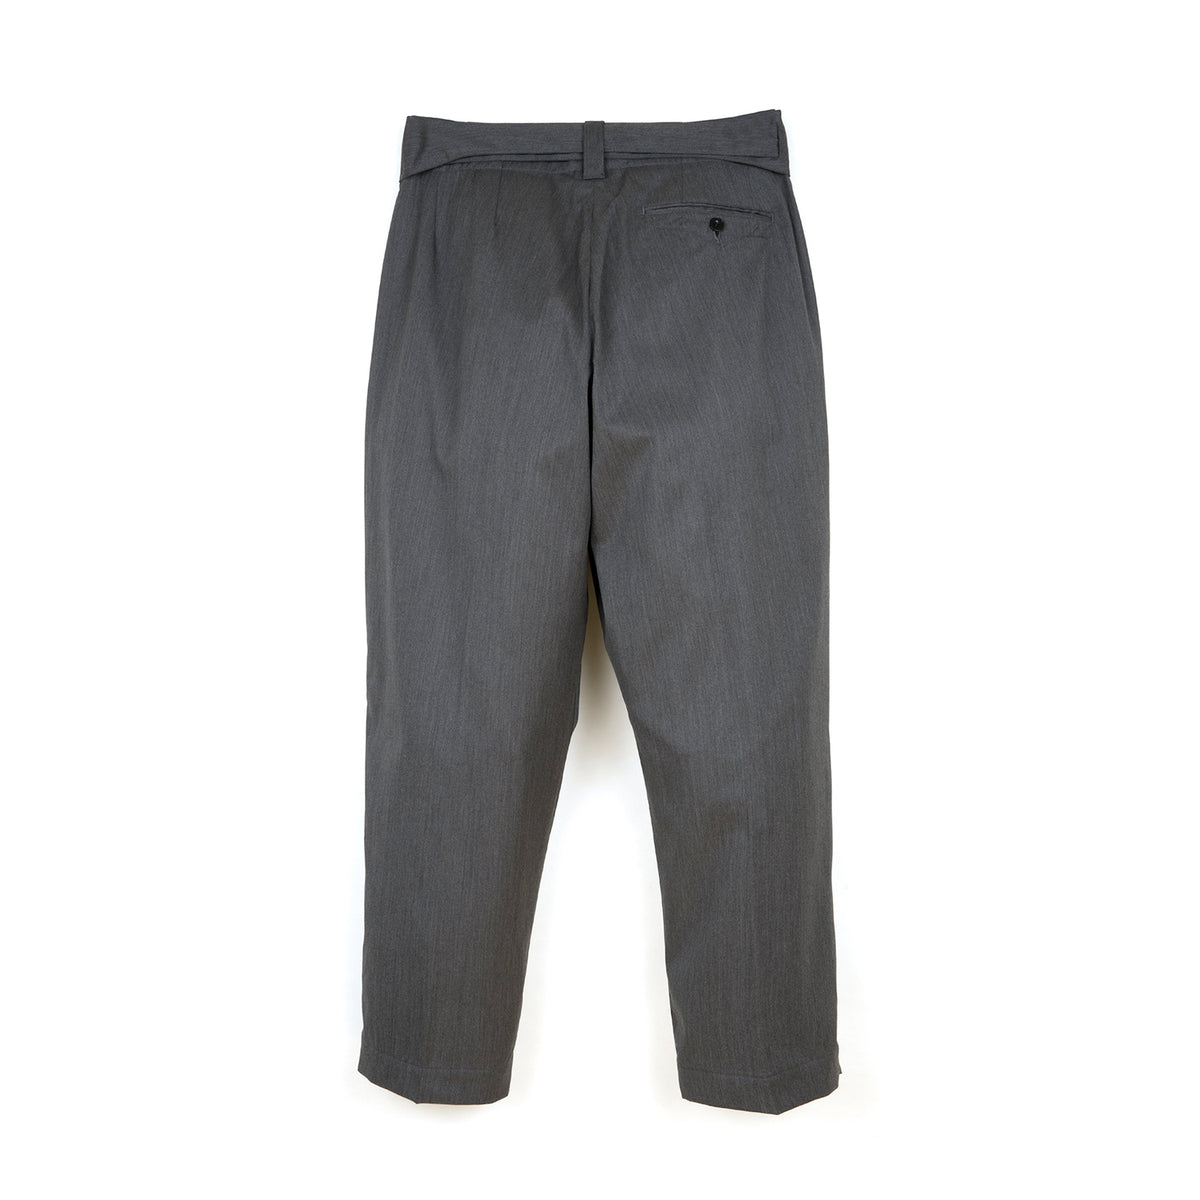 Haversack | Pants Charcoal 861924-4 - Concrete